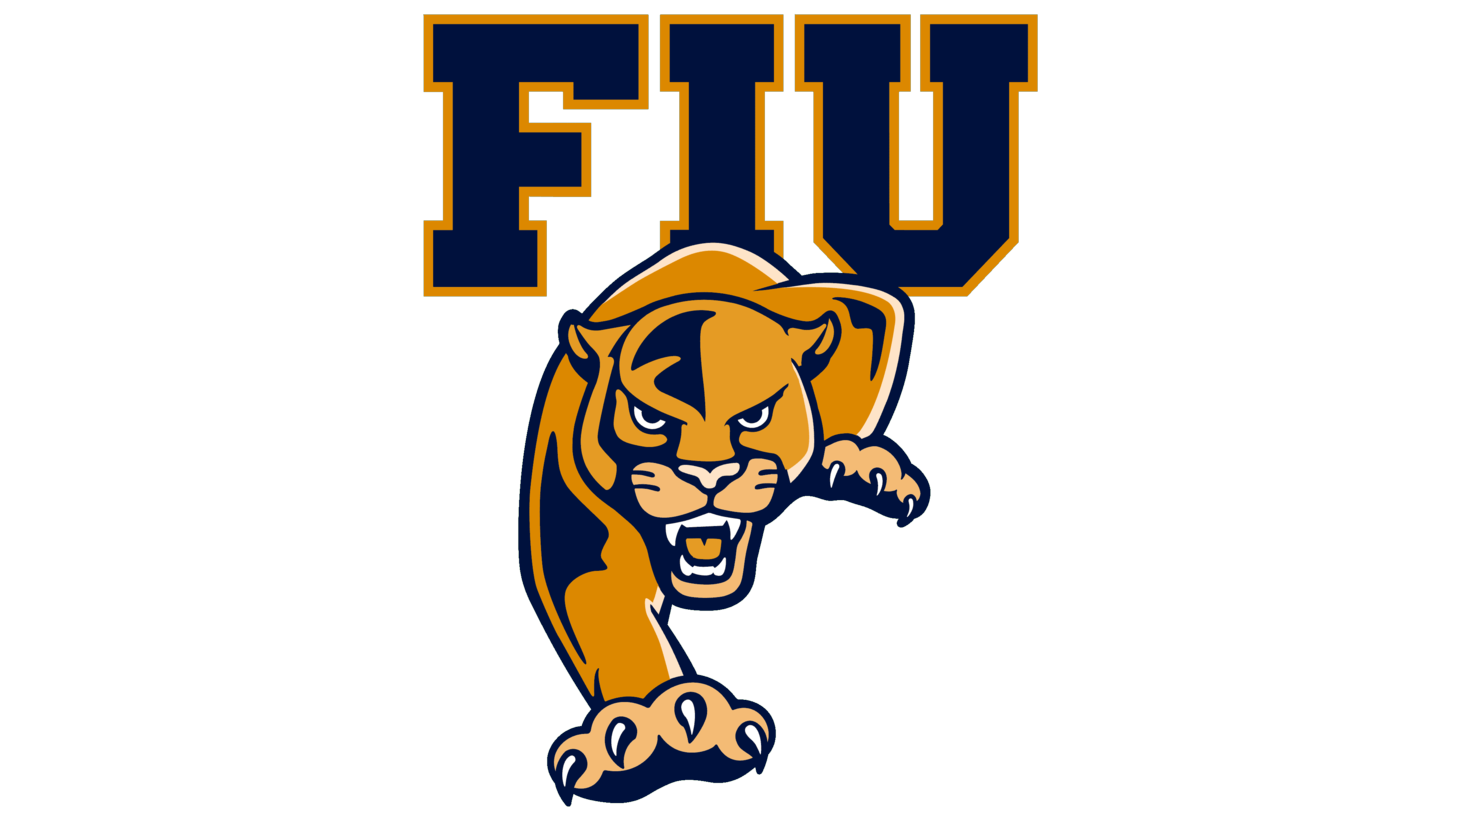 Florida international university sign